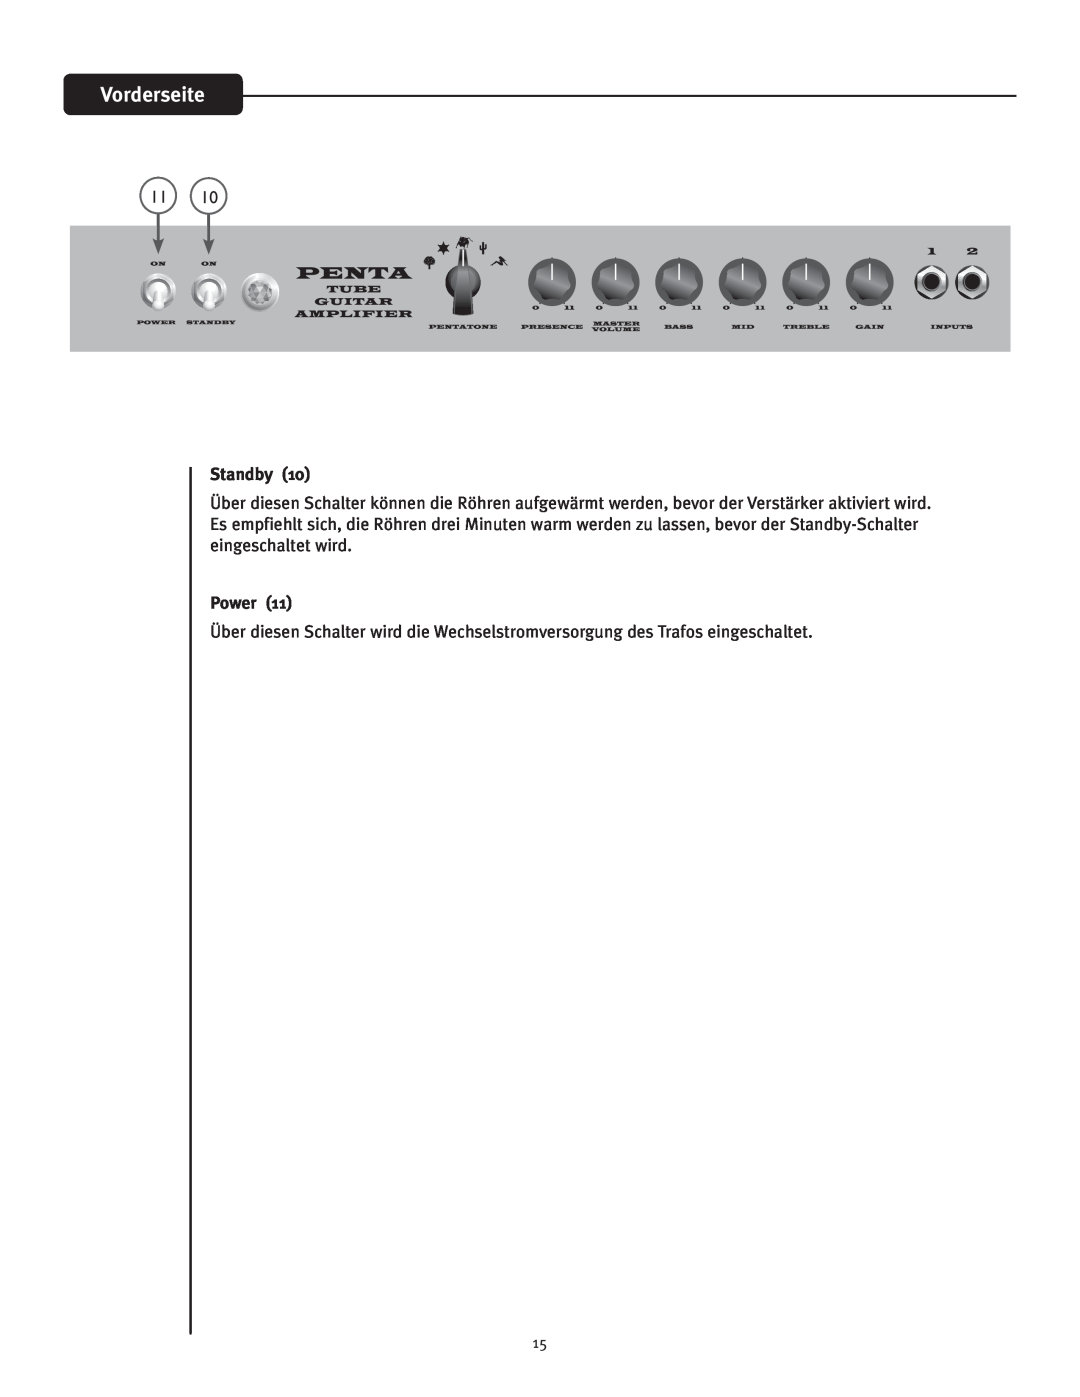 Peavey Penta Tube Amplifier owner manual Vorderseite, Standby, Power 